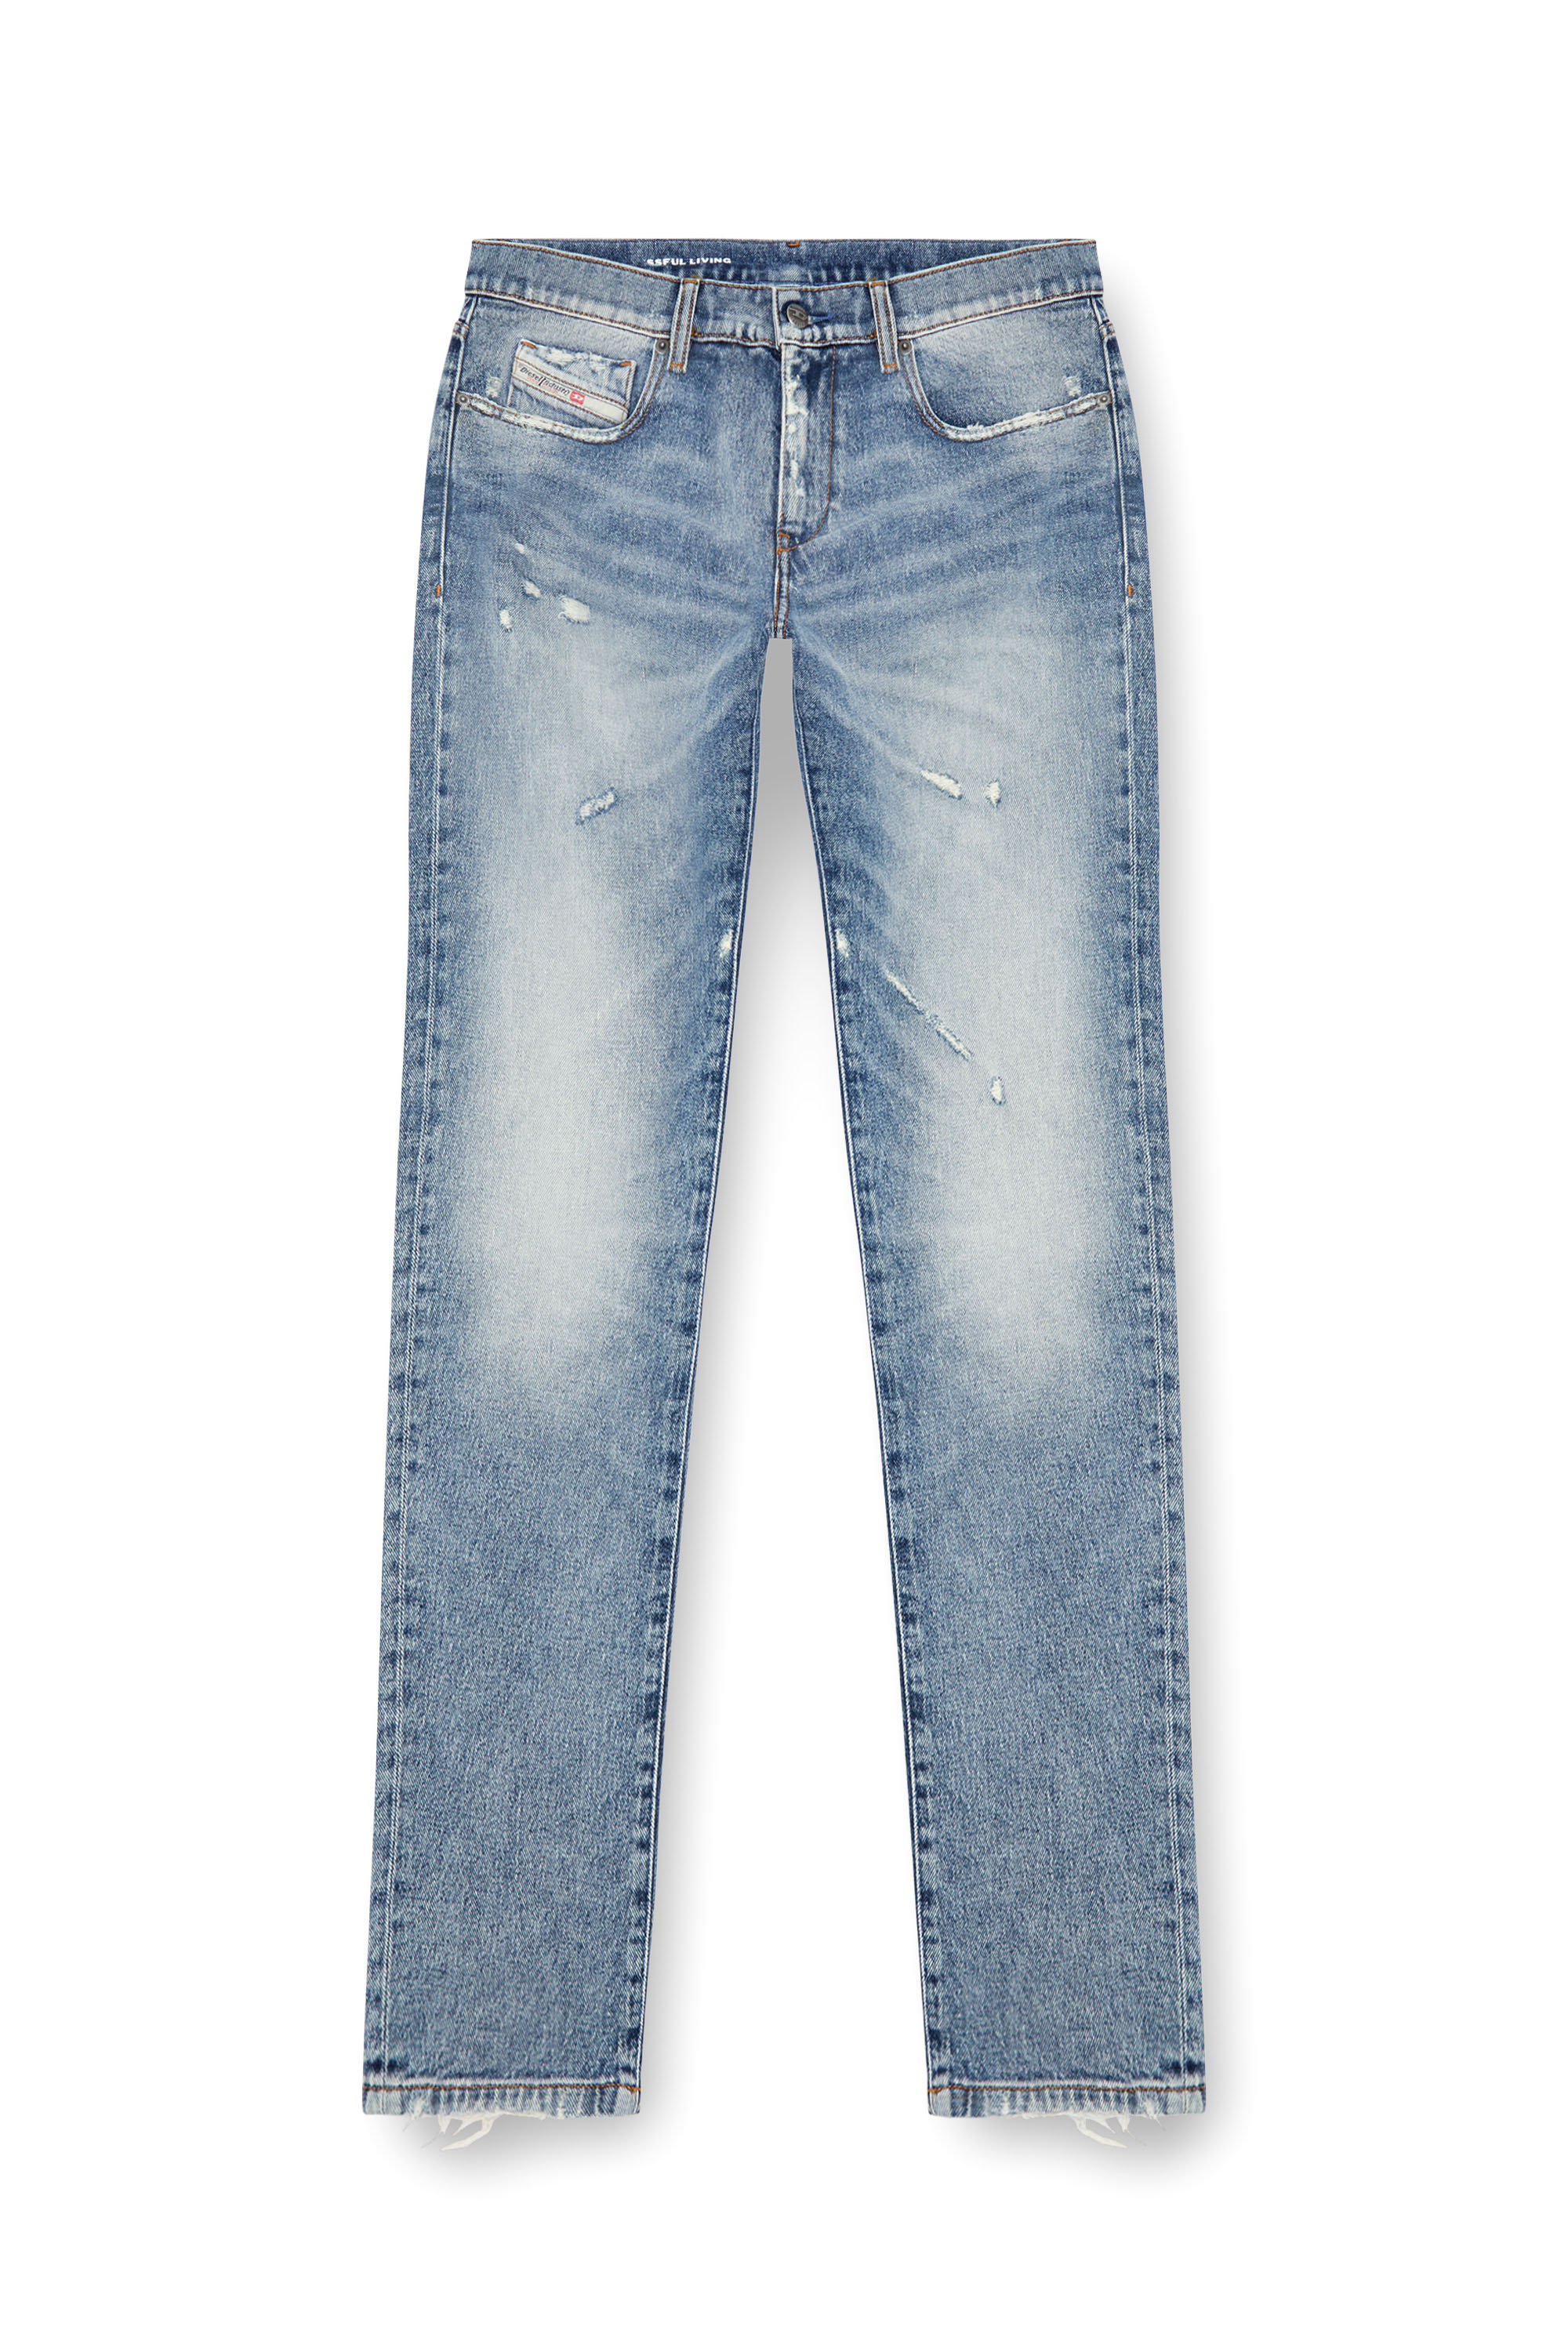 Diesel - Slim Jeans 2019 D-Strukt 09J57, Hombre Slim Jeans - 2019 D-Strukt in Azul marino - Image 5